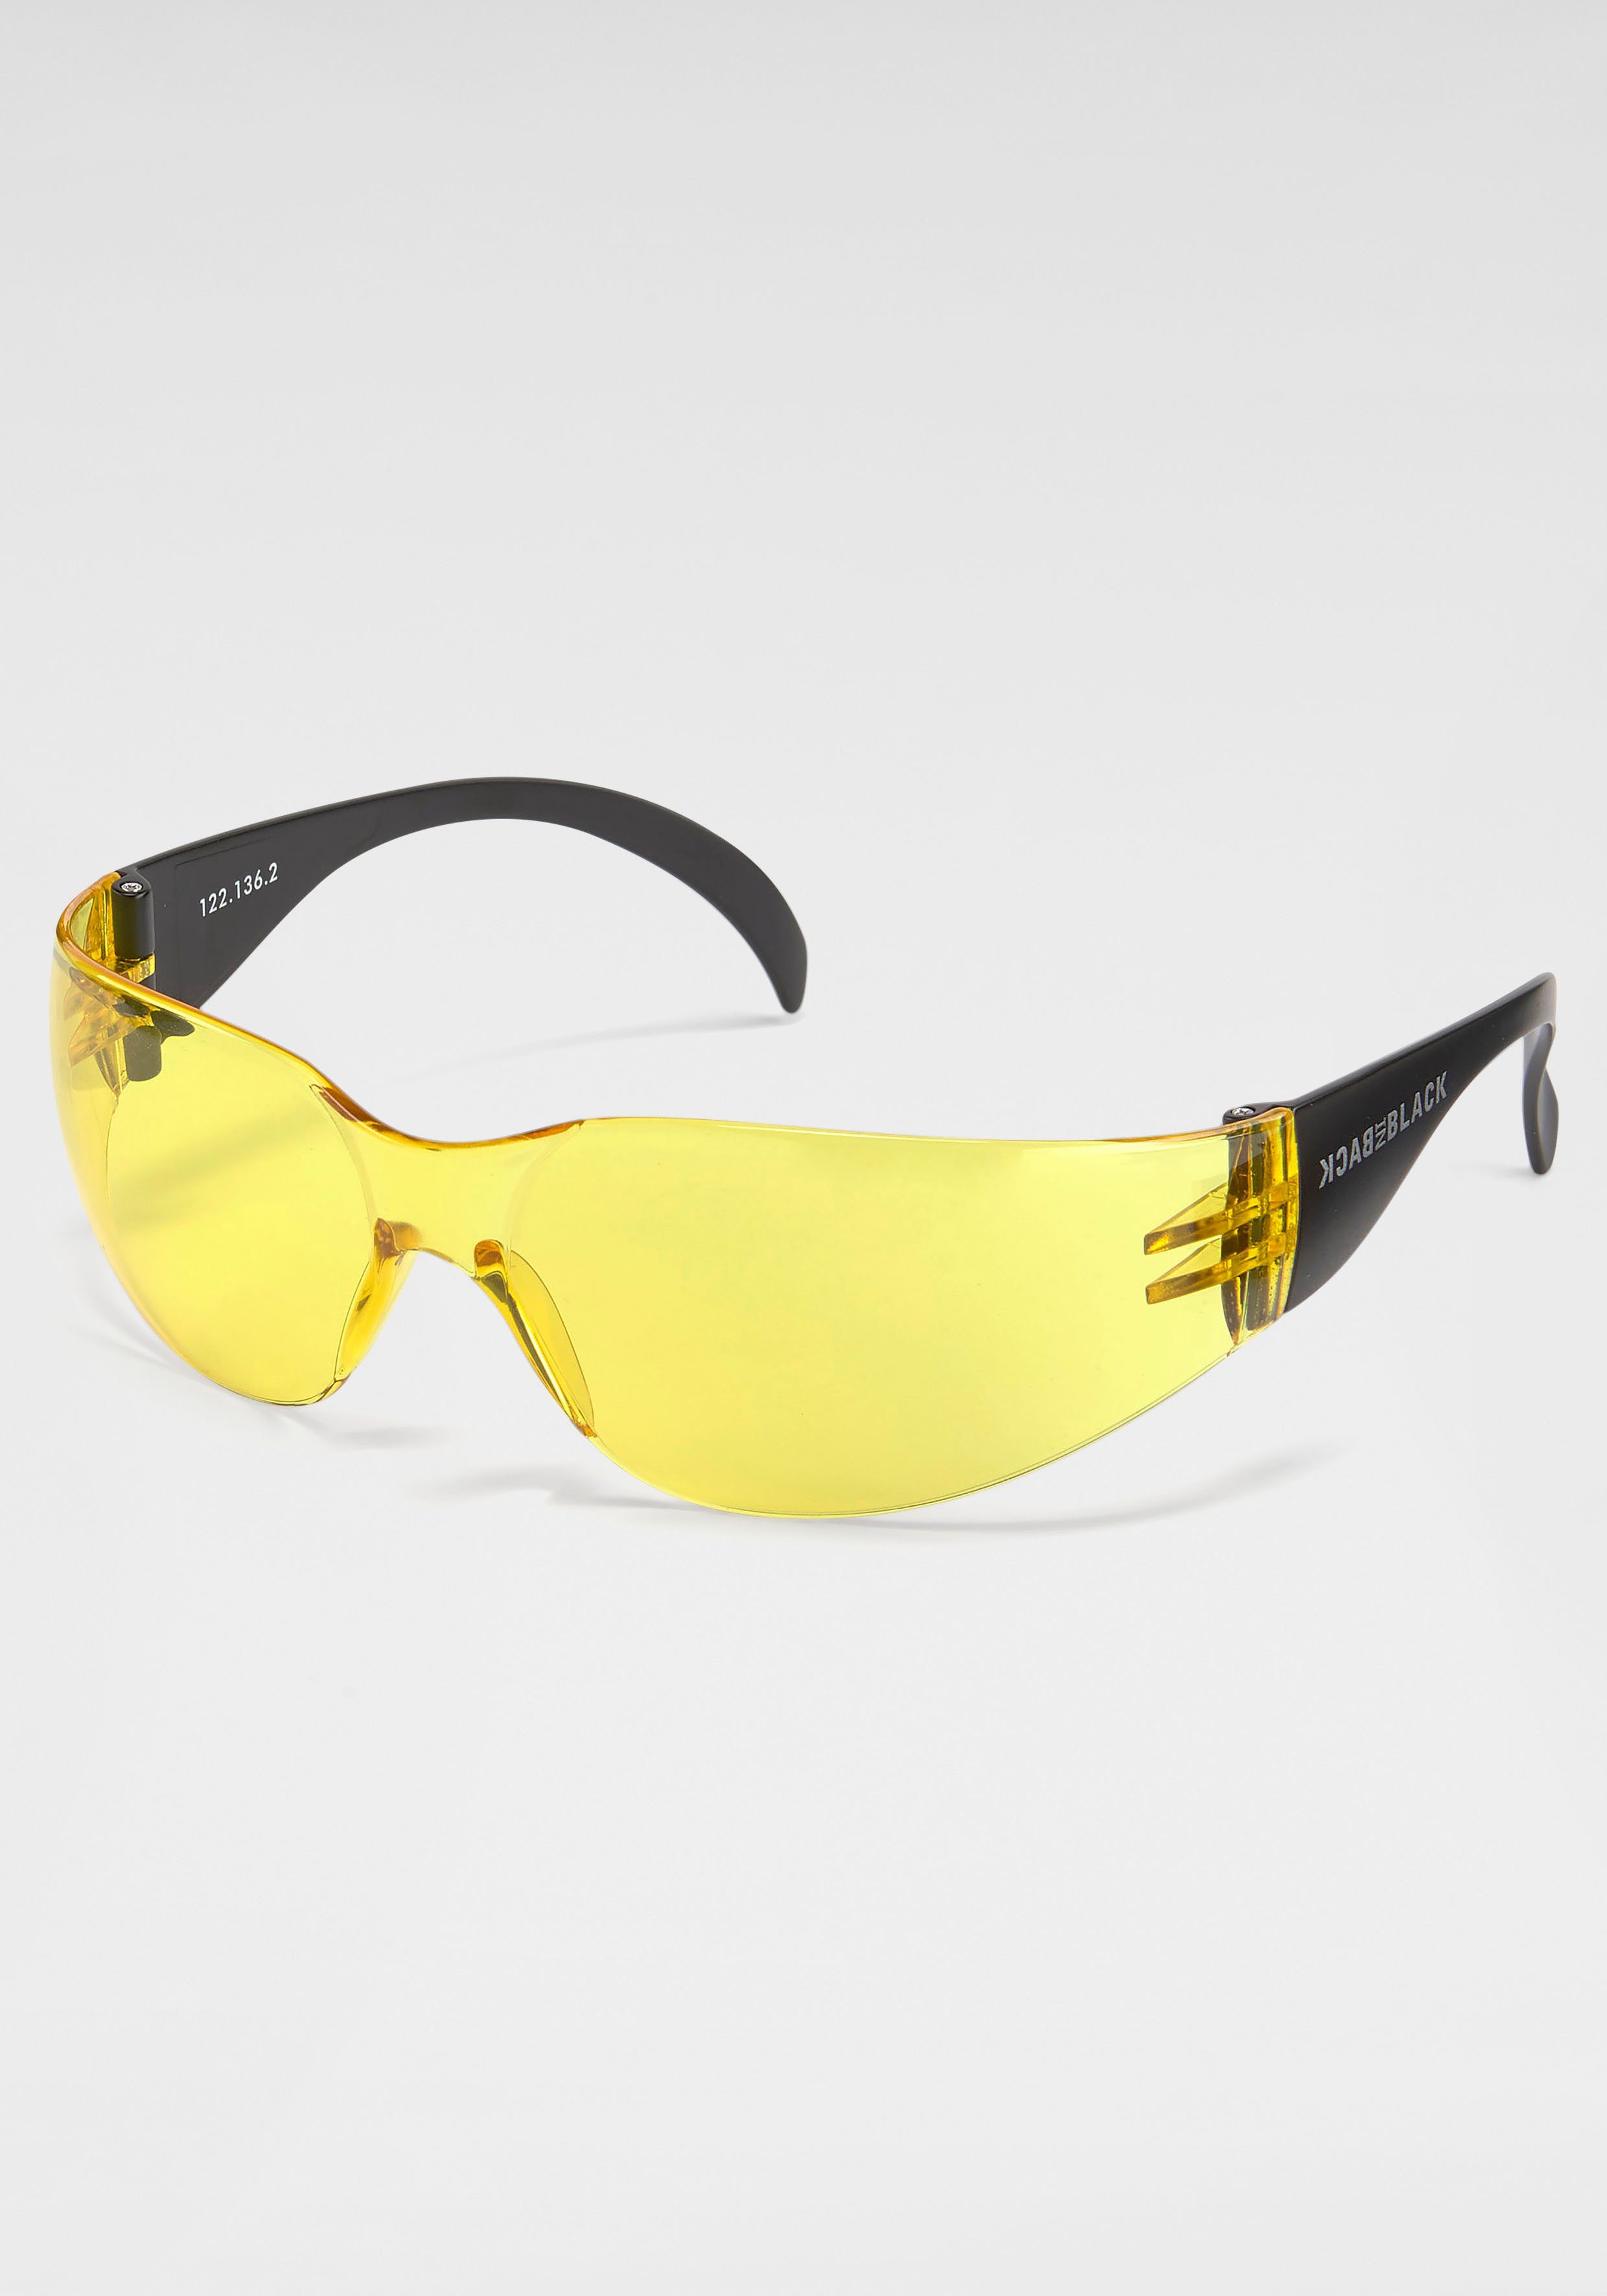 BACK IN BLACK Eyewear gelb Randlos Sonnenbrille